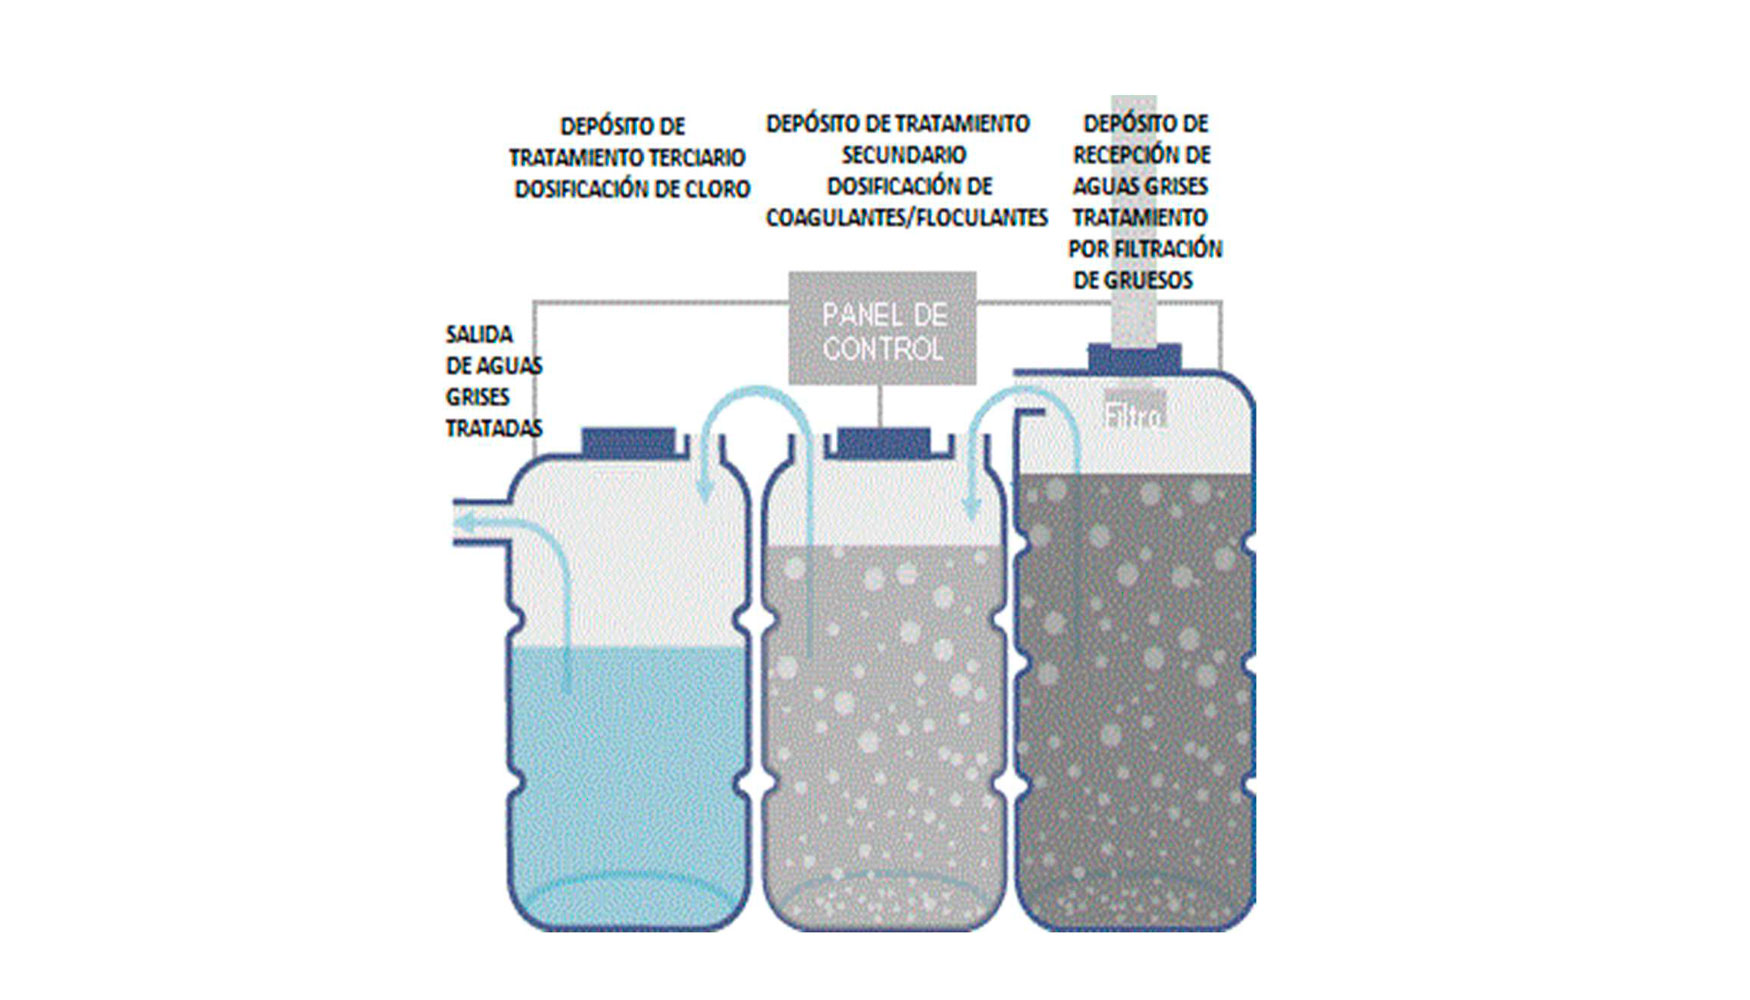 Figura 3 - Equipo de reutilizacin de aguas grises con tratamiento fsico-qumico